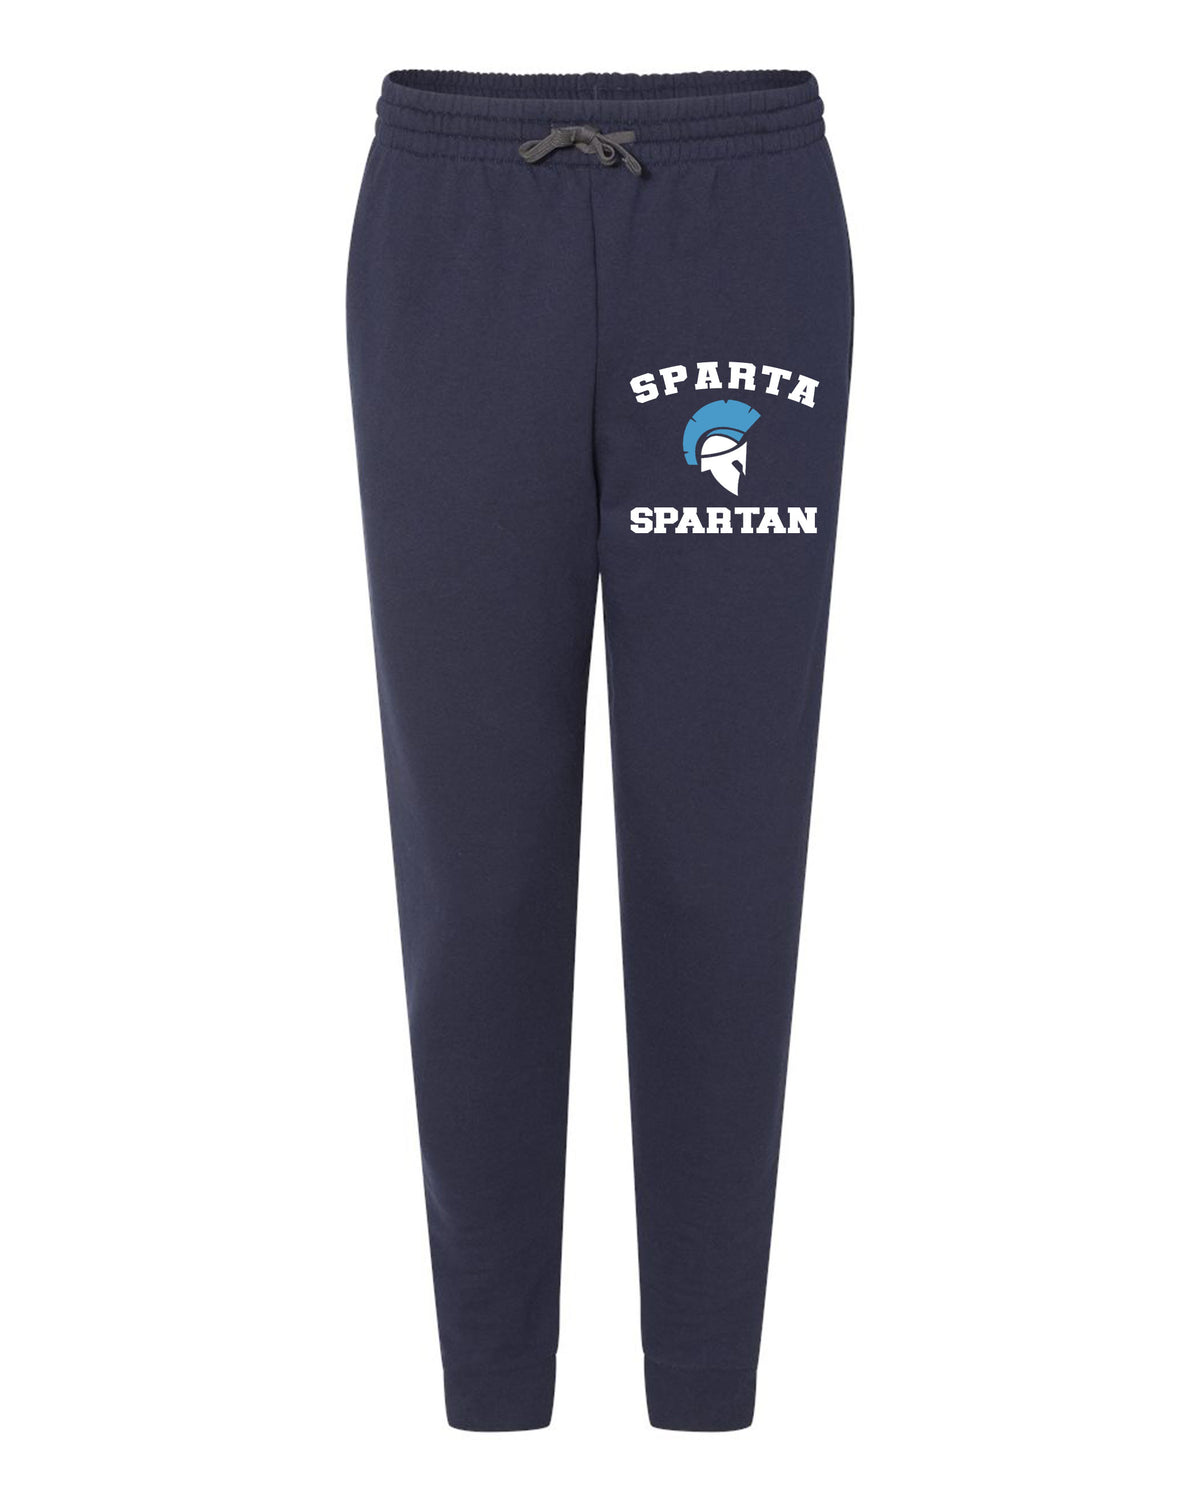 Sparta School Design 1 Sweatpants